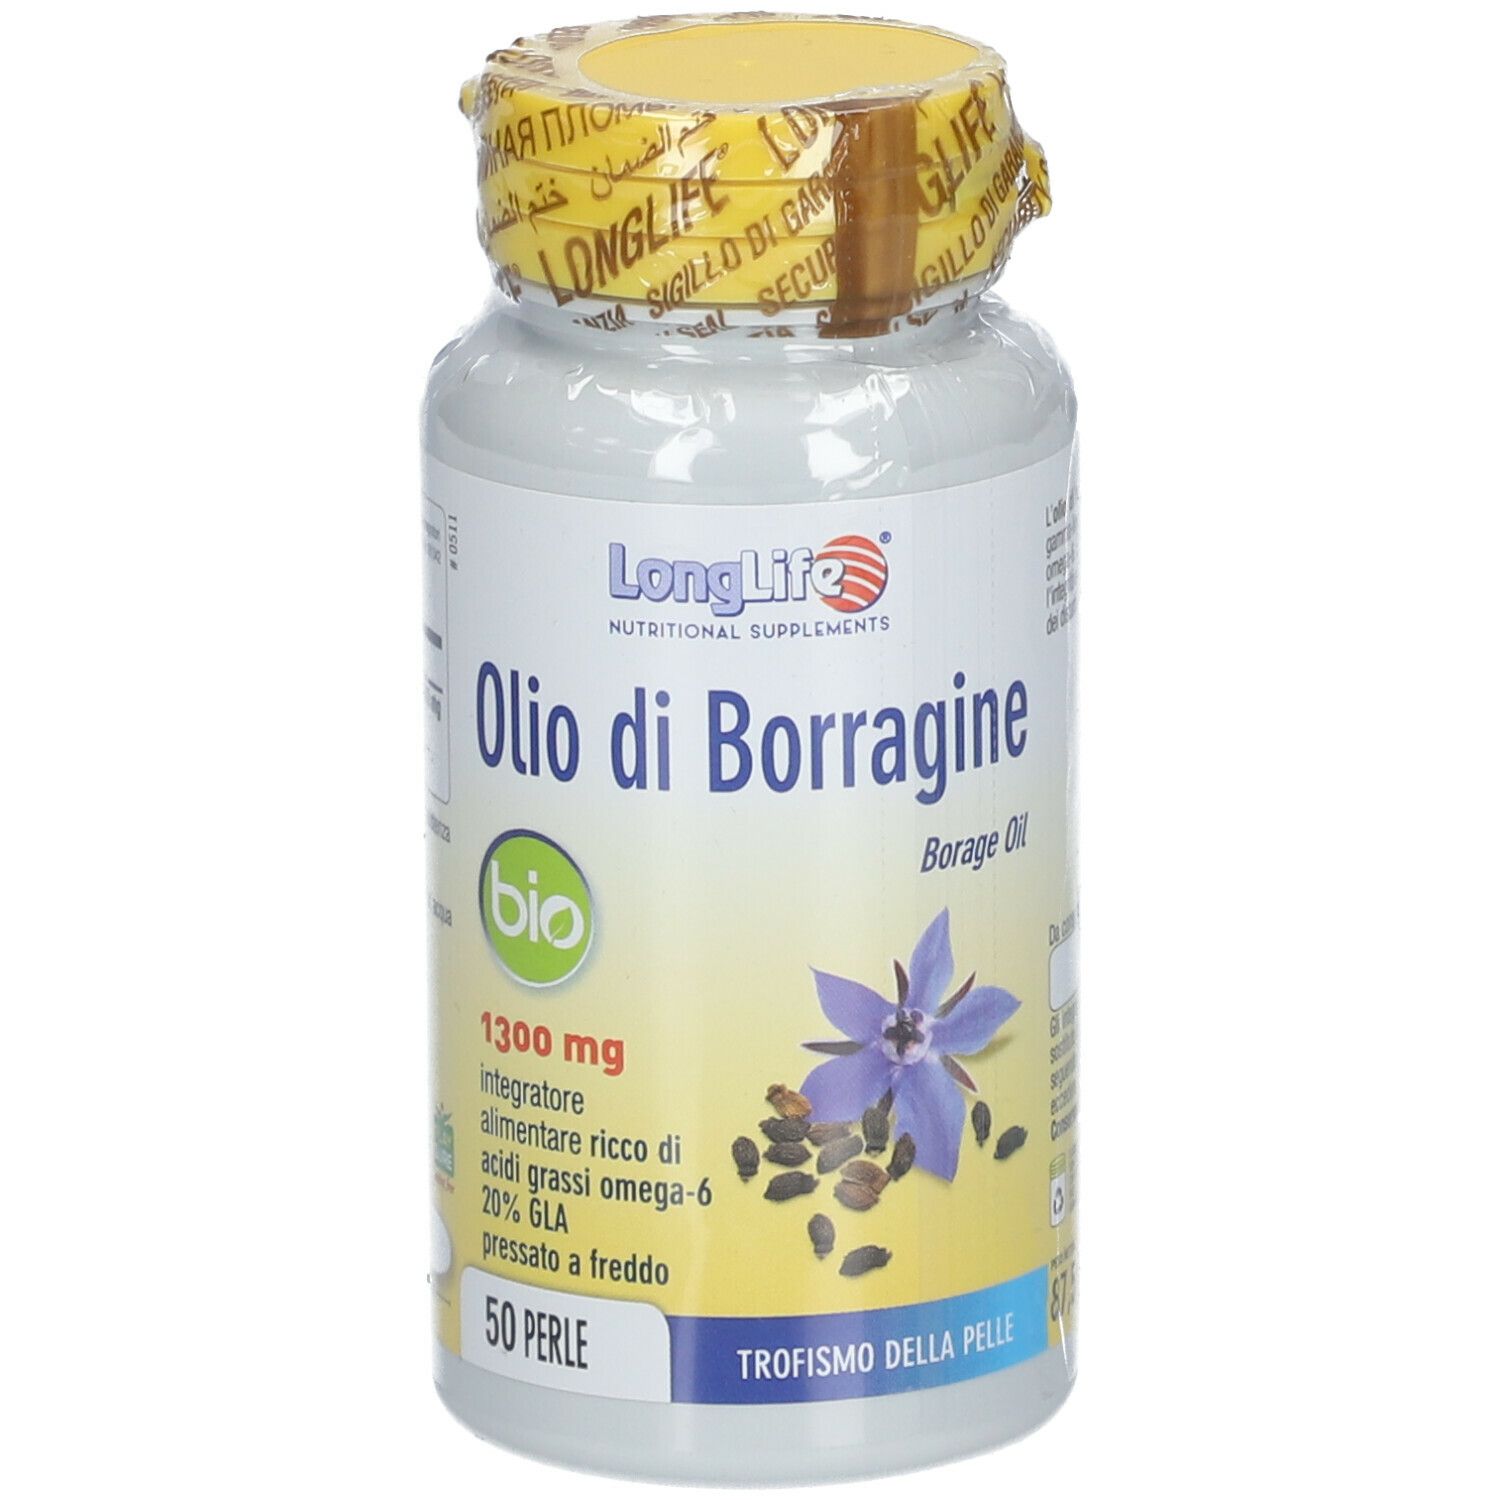 Image of LongLife® Olio di Borragine Bio 1300mg